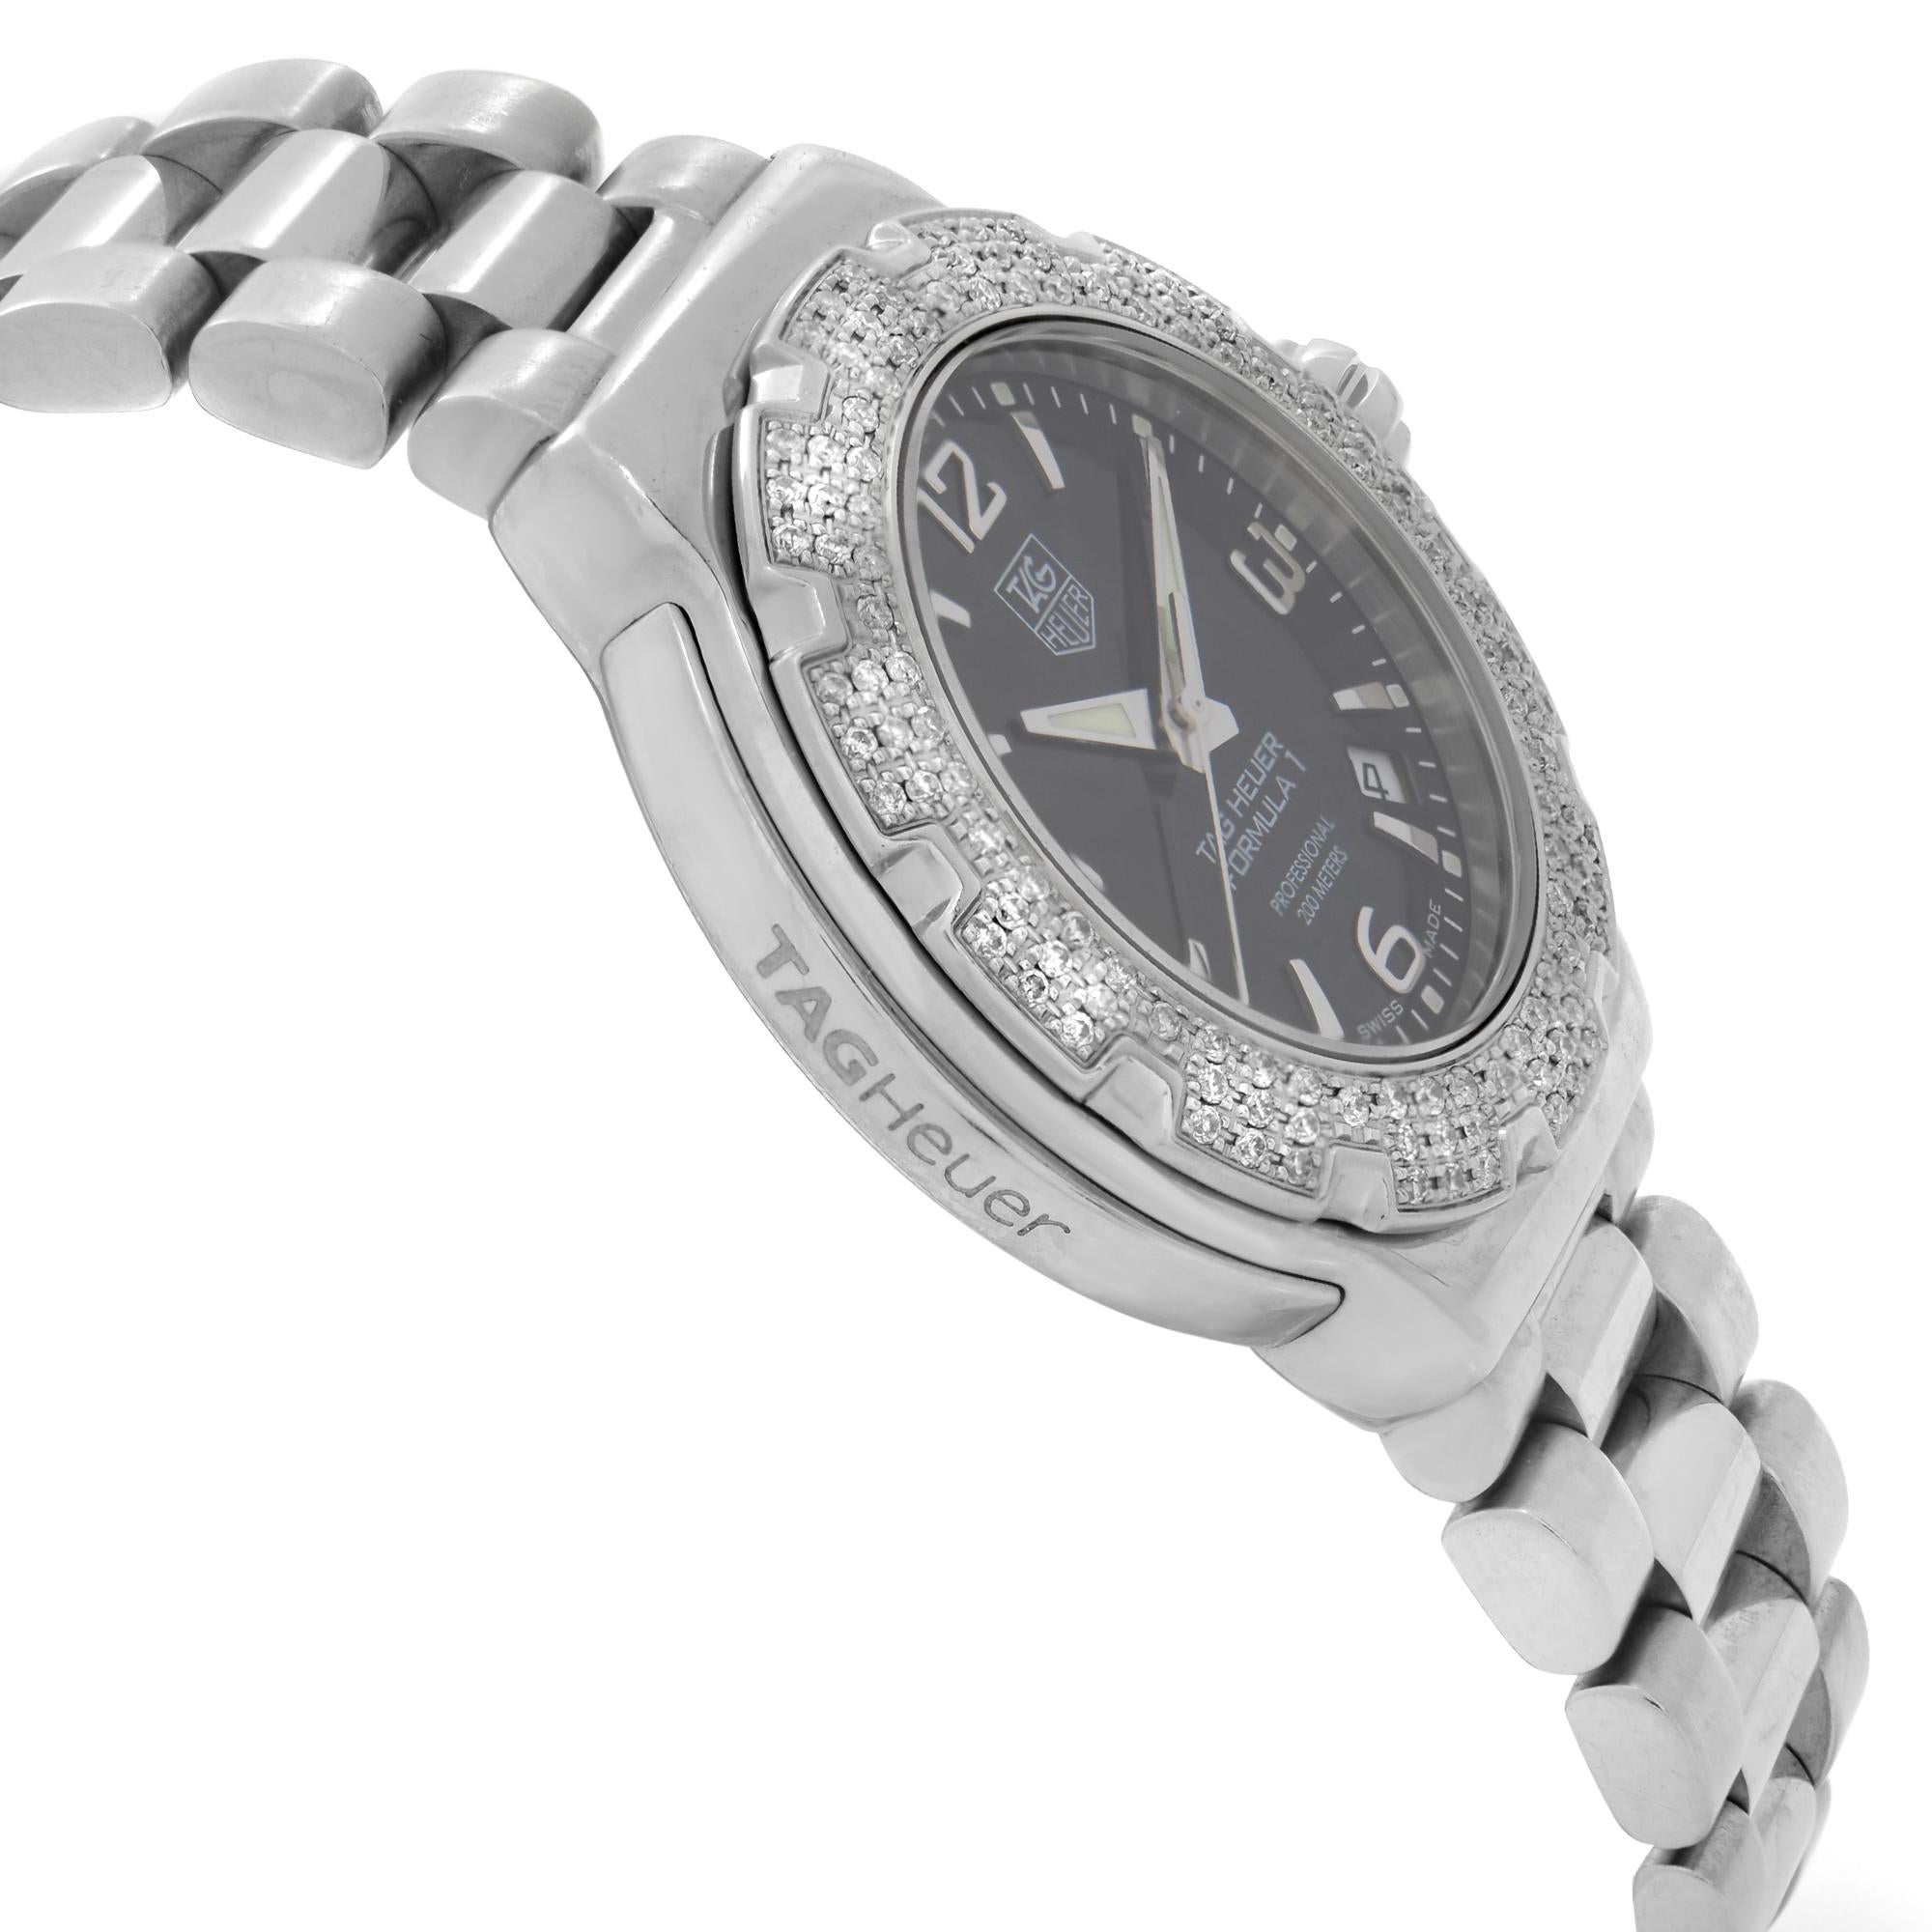 tag heuer formula 1 women's diamond watch price